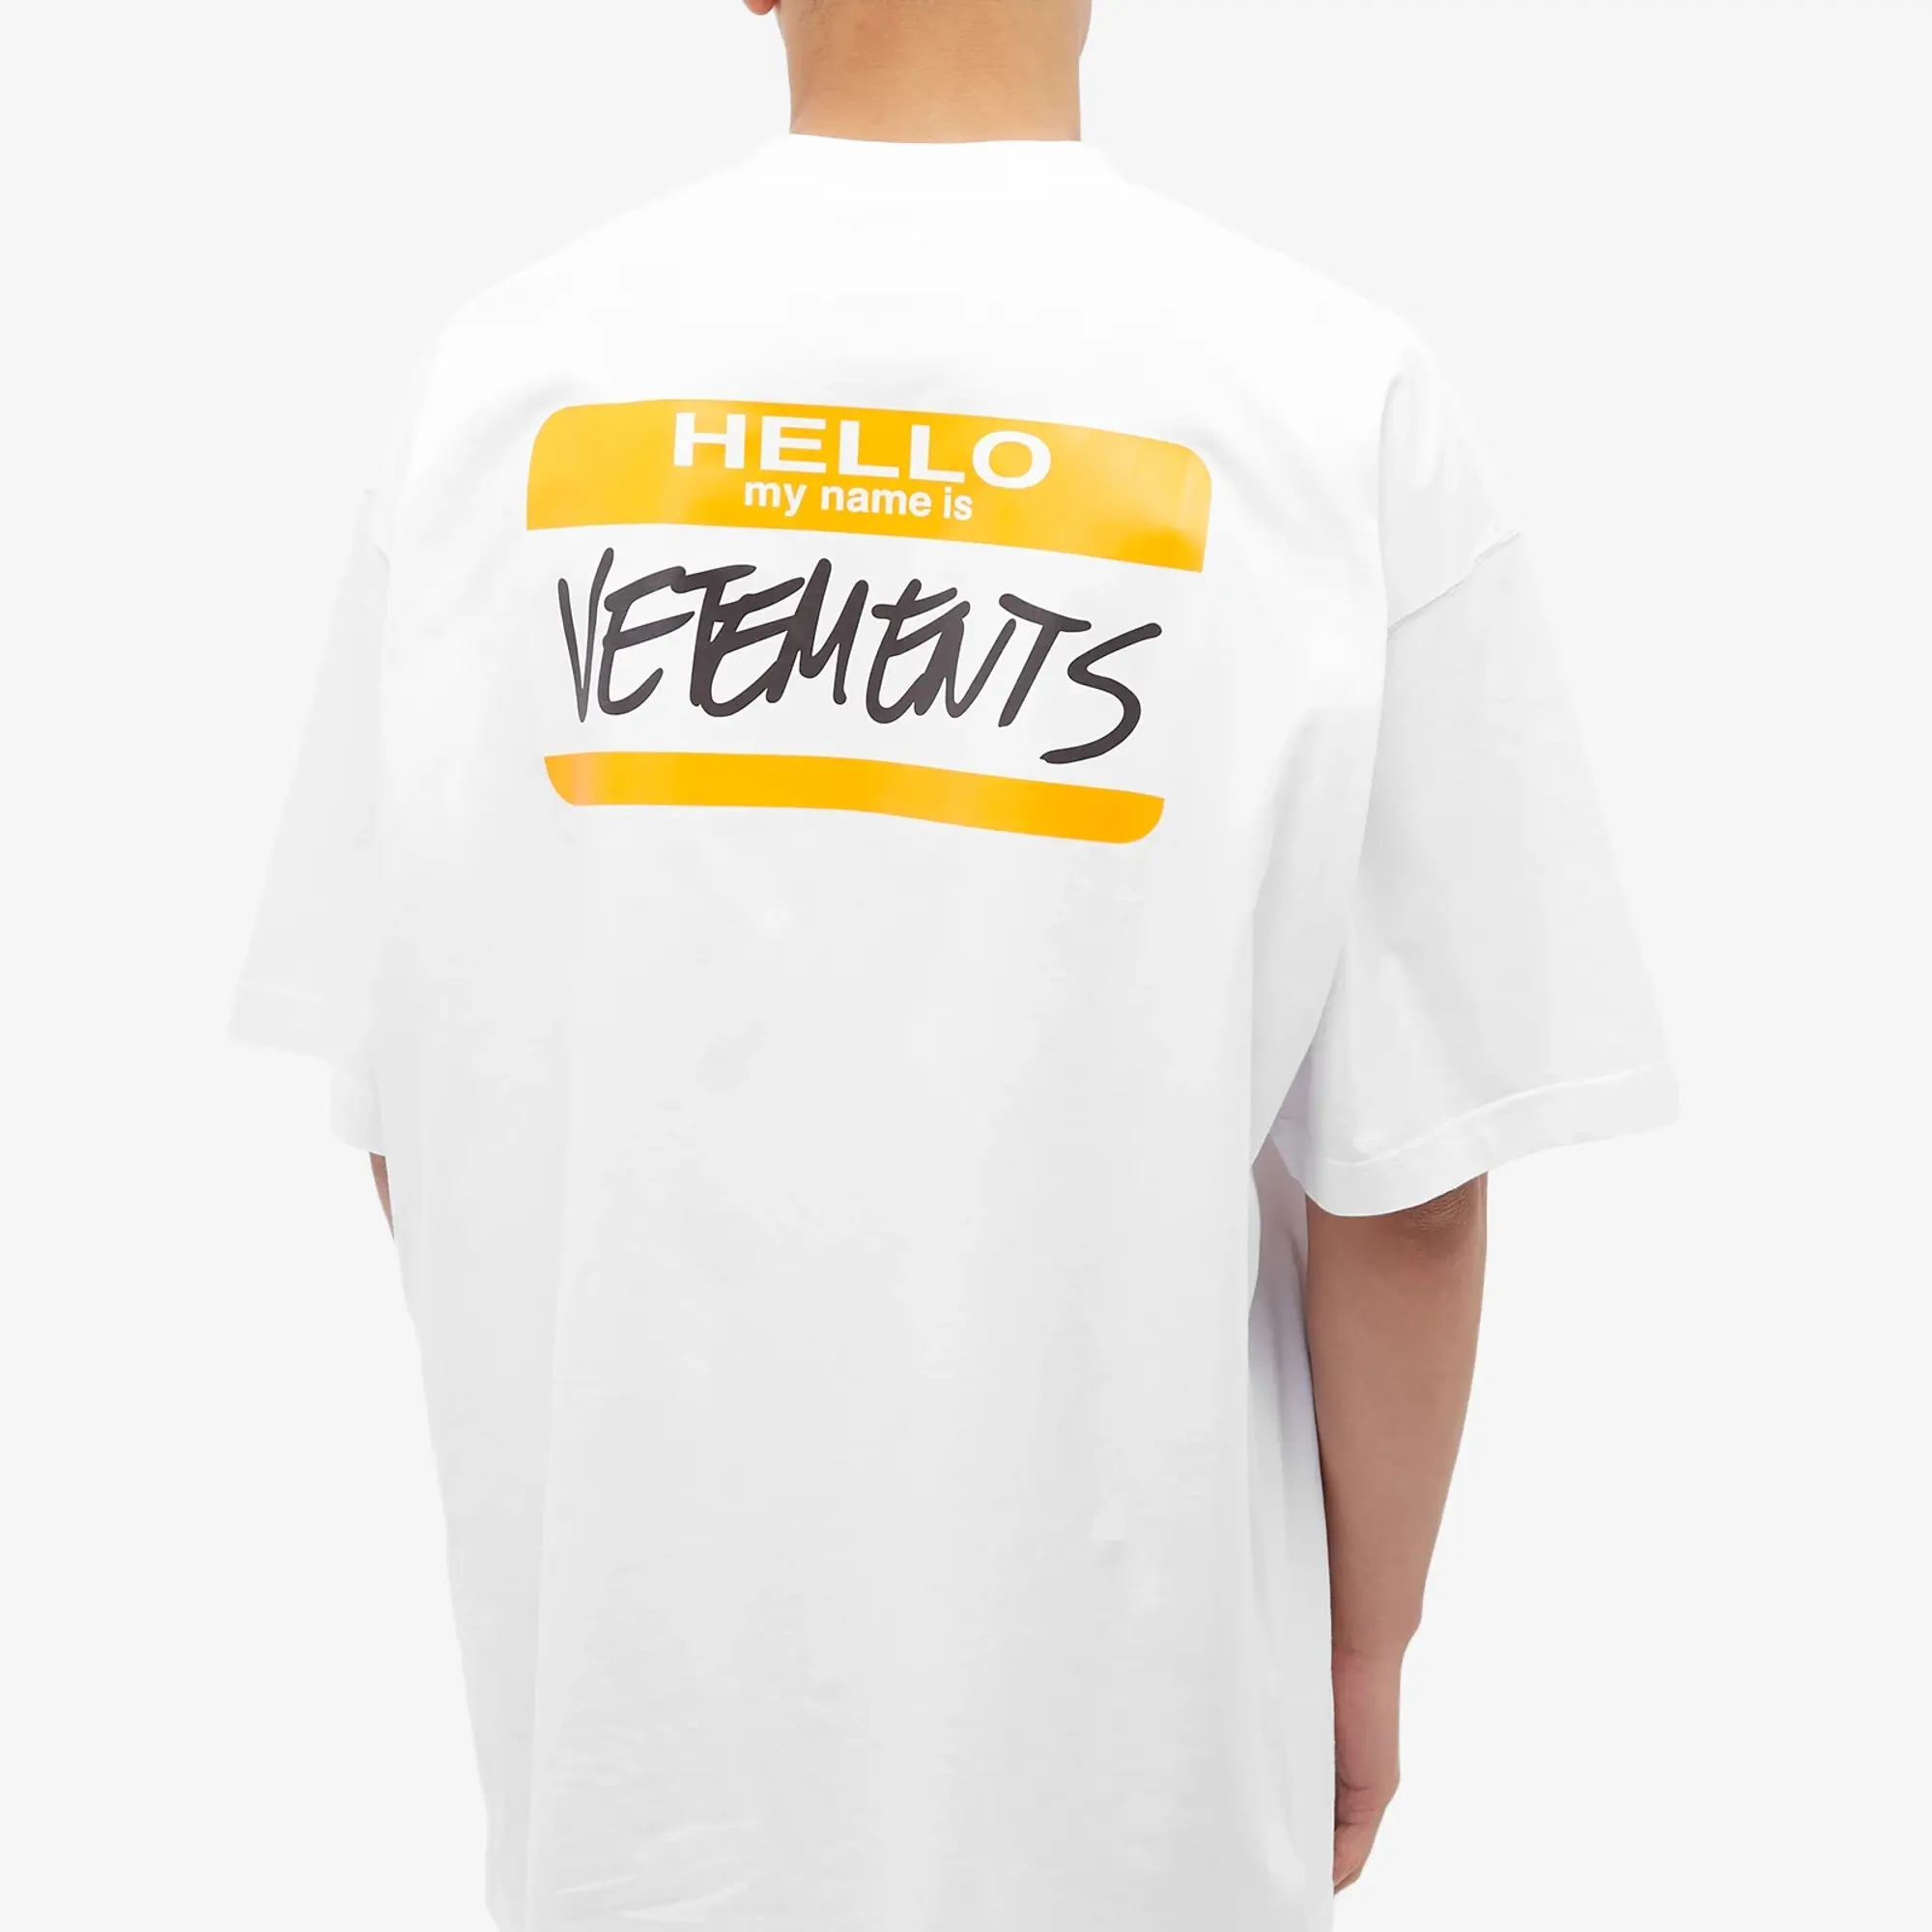 Vetements Men's My Name is Vetements Men's T-Shirt White